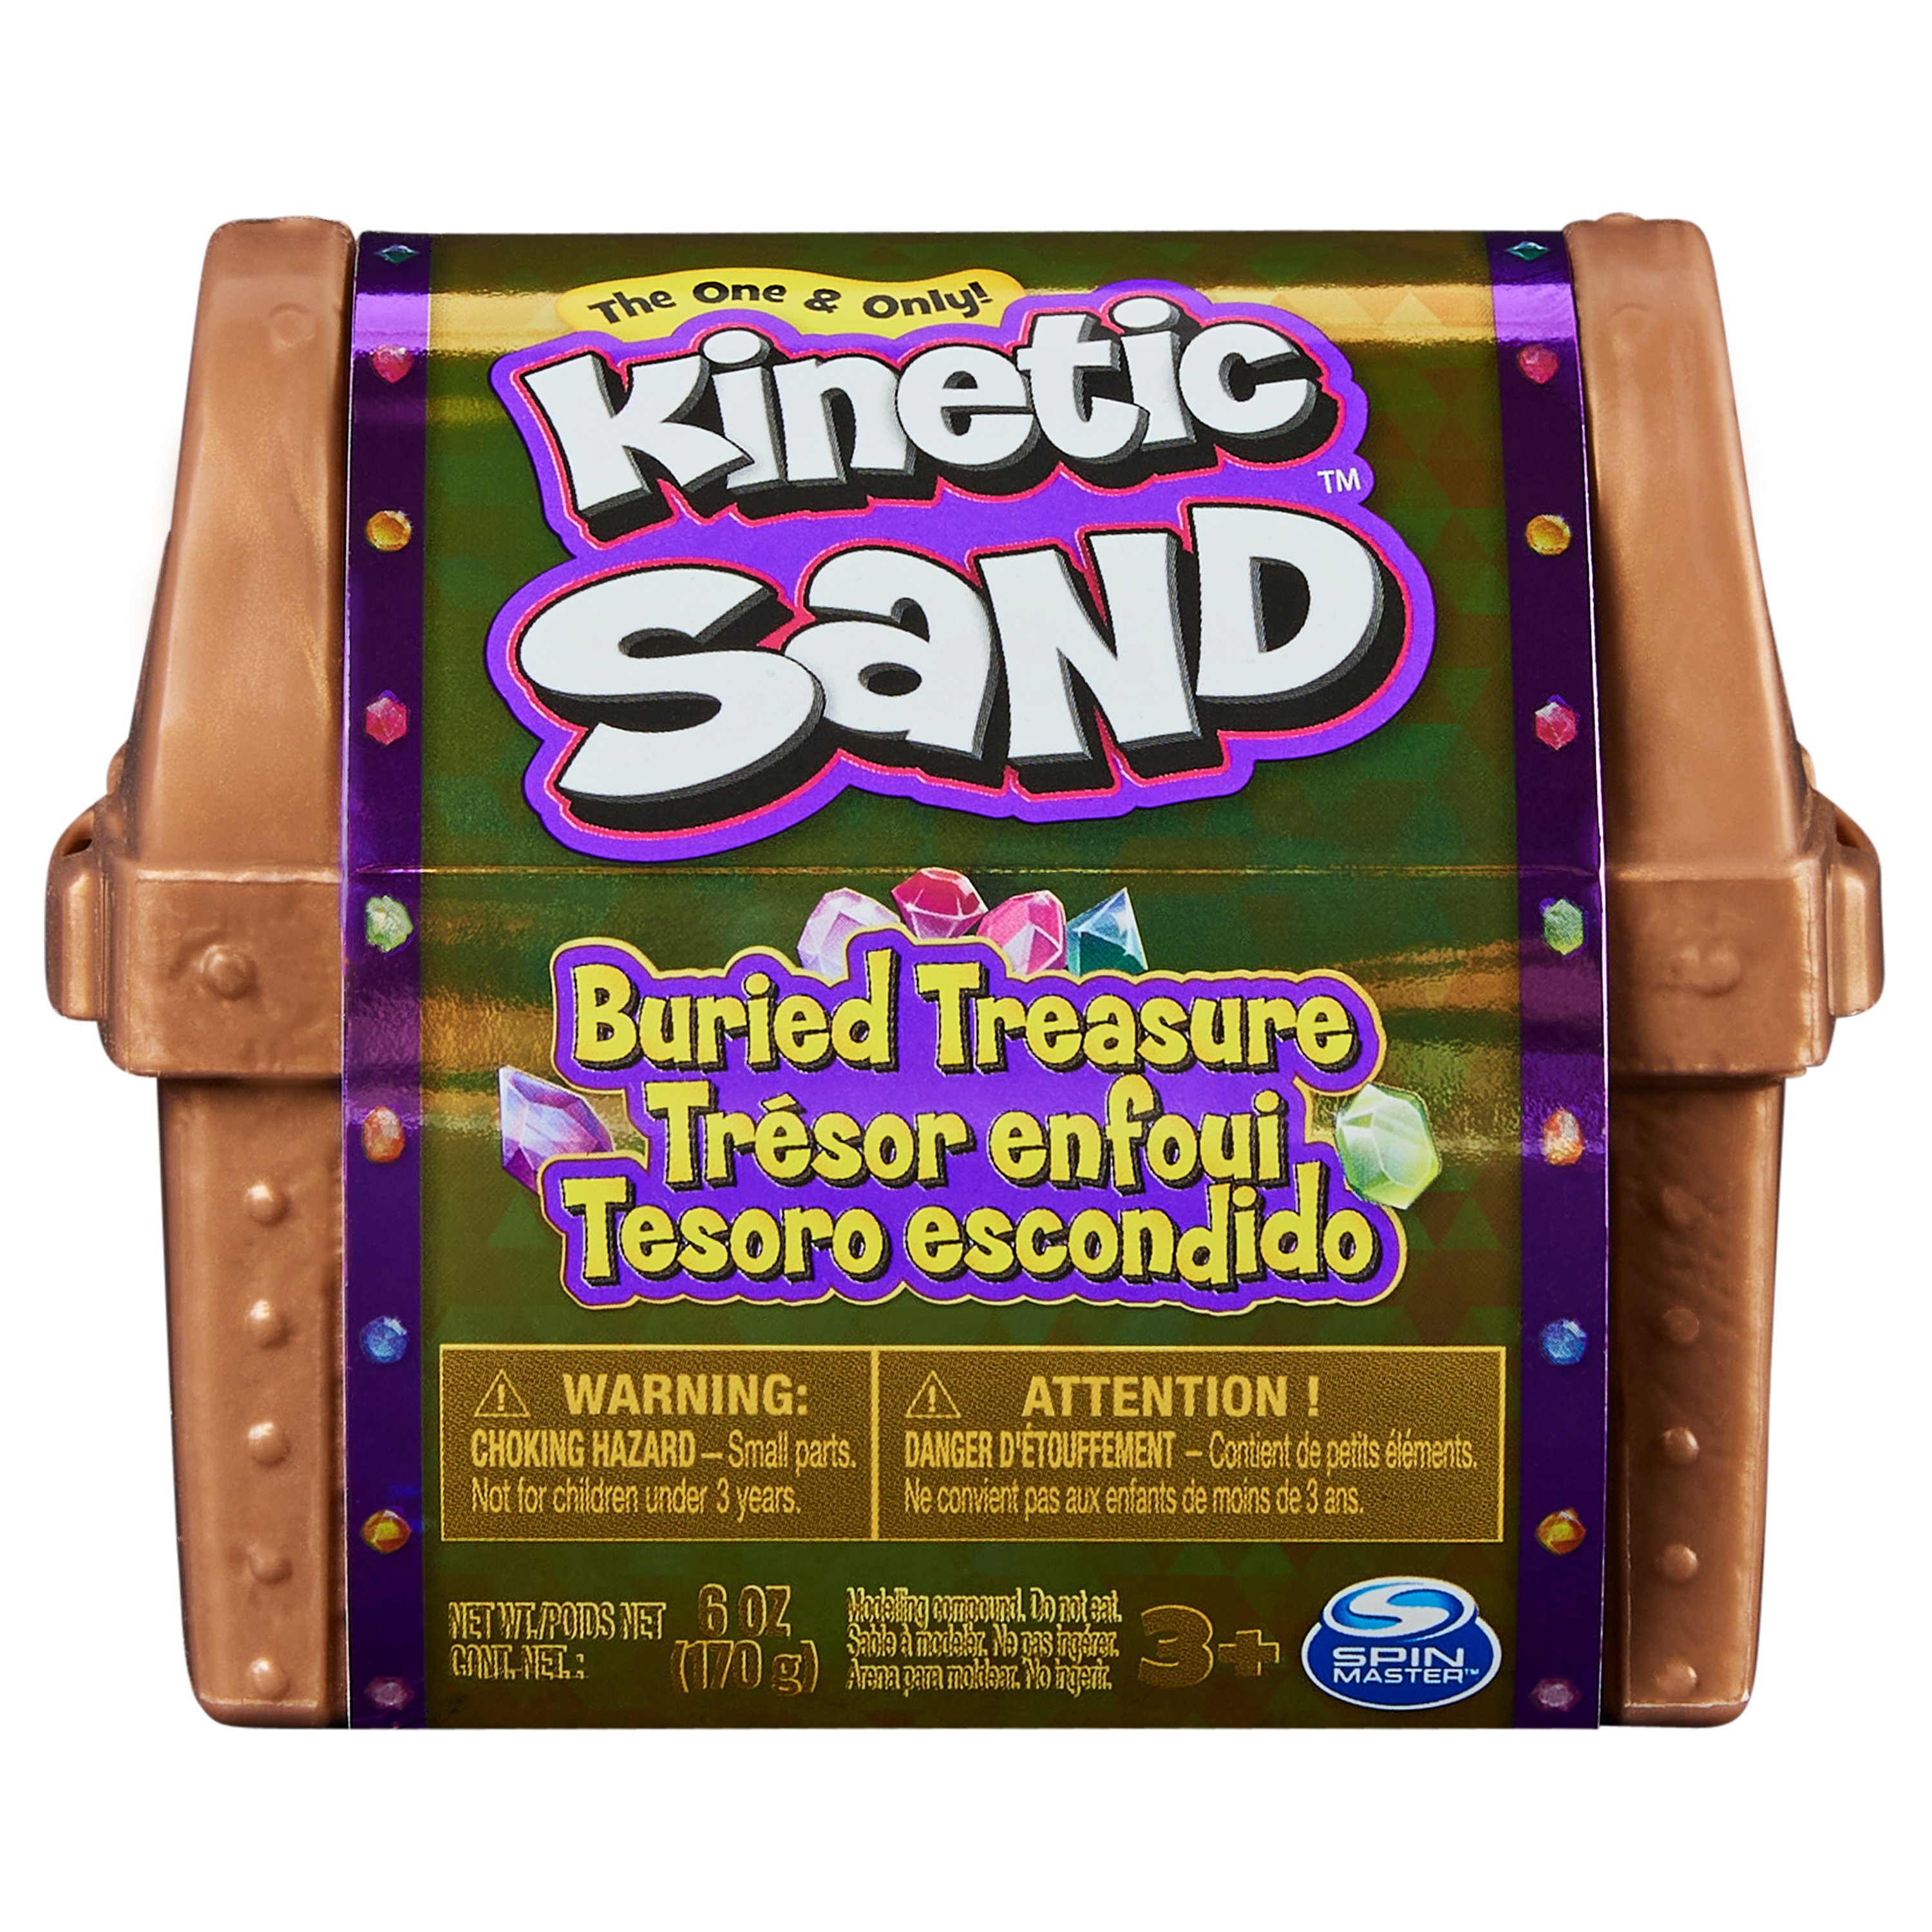 Kinetic Sand Beach Castle - Shop Slime at H-E-B